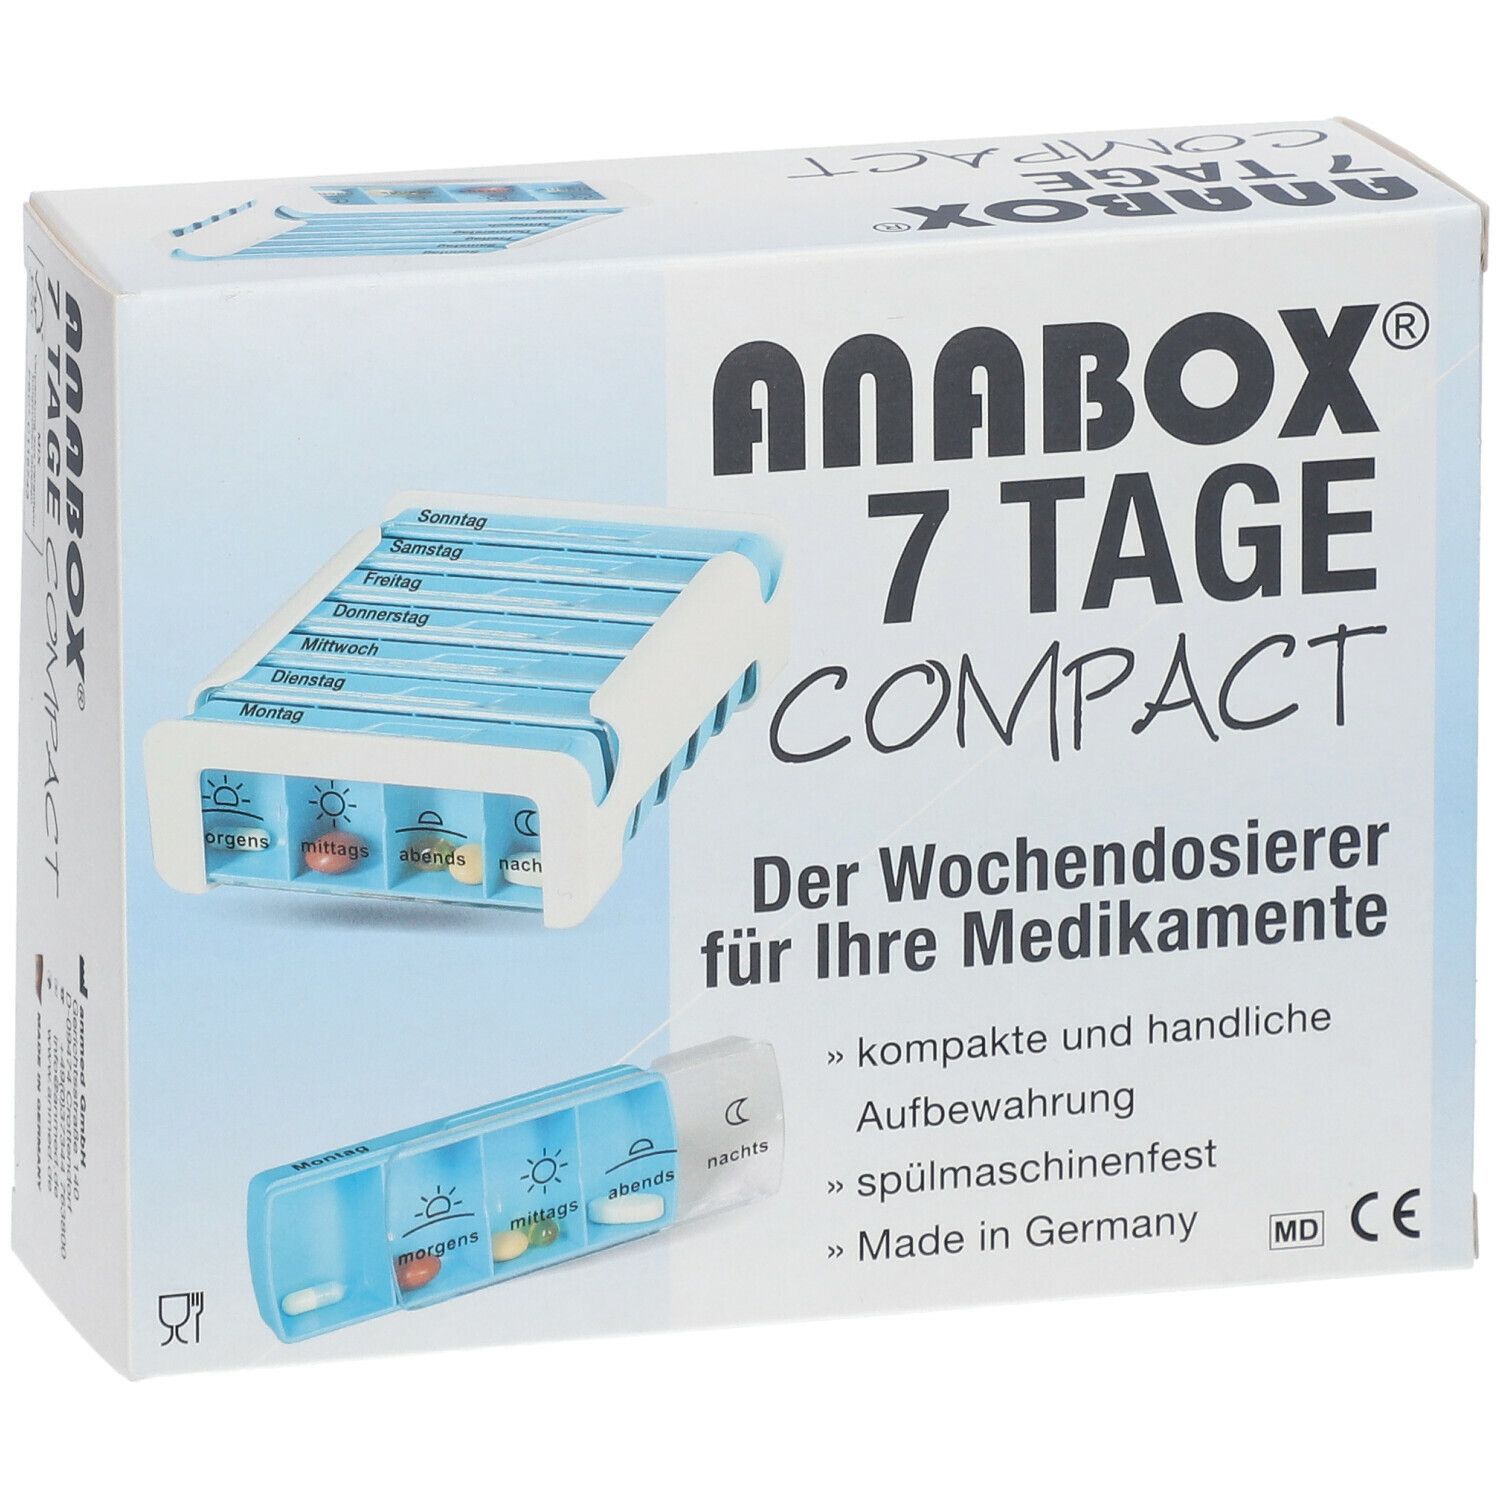 ANABOX® 7 Tage Compact blau/weiß